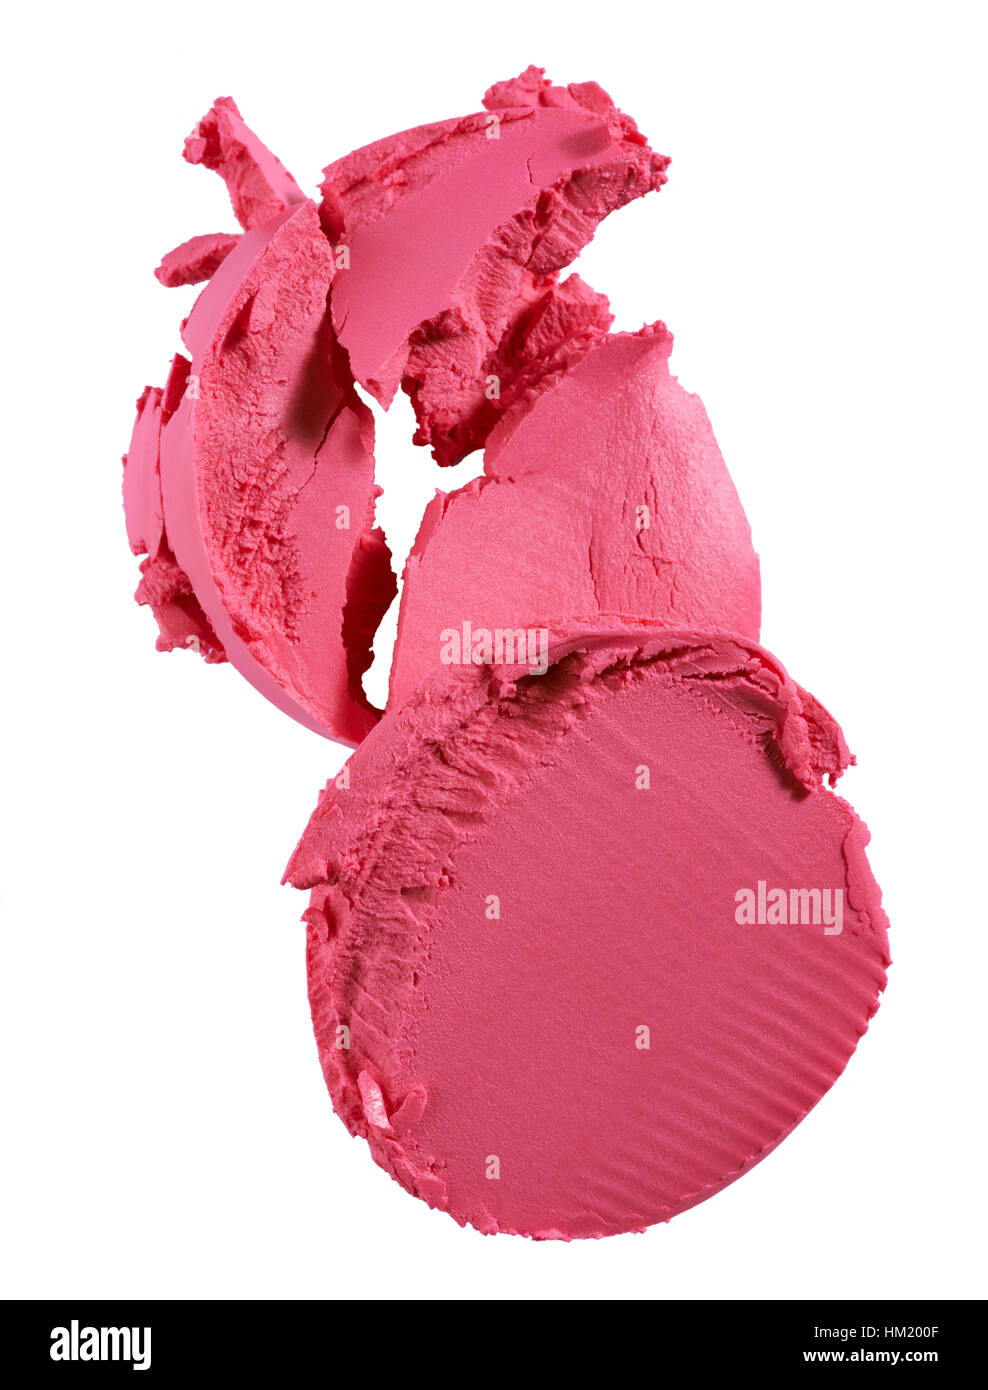 Un recorte de la imagen de una muestra de rubor o blusher rosa palo. Foto de stock